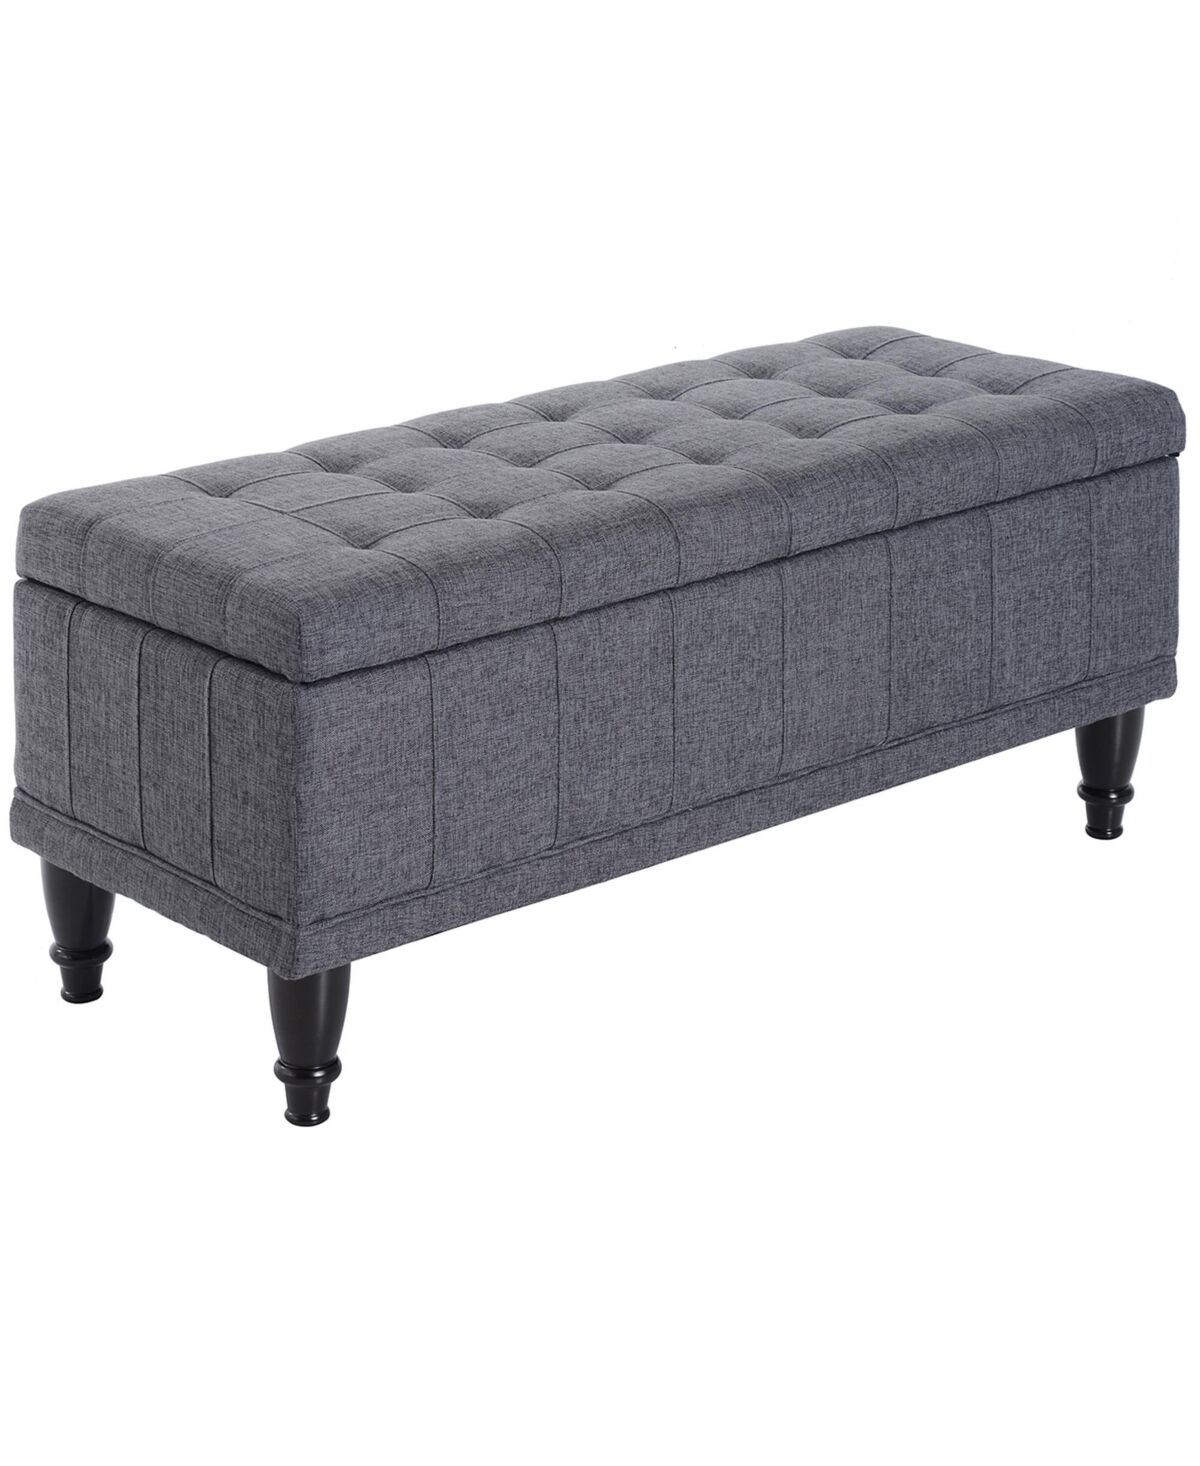 Homcom Lift Top Fabric Storage Shoe Bench Ottoman Stool Tufted Home Furniture - Dark heather grey